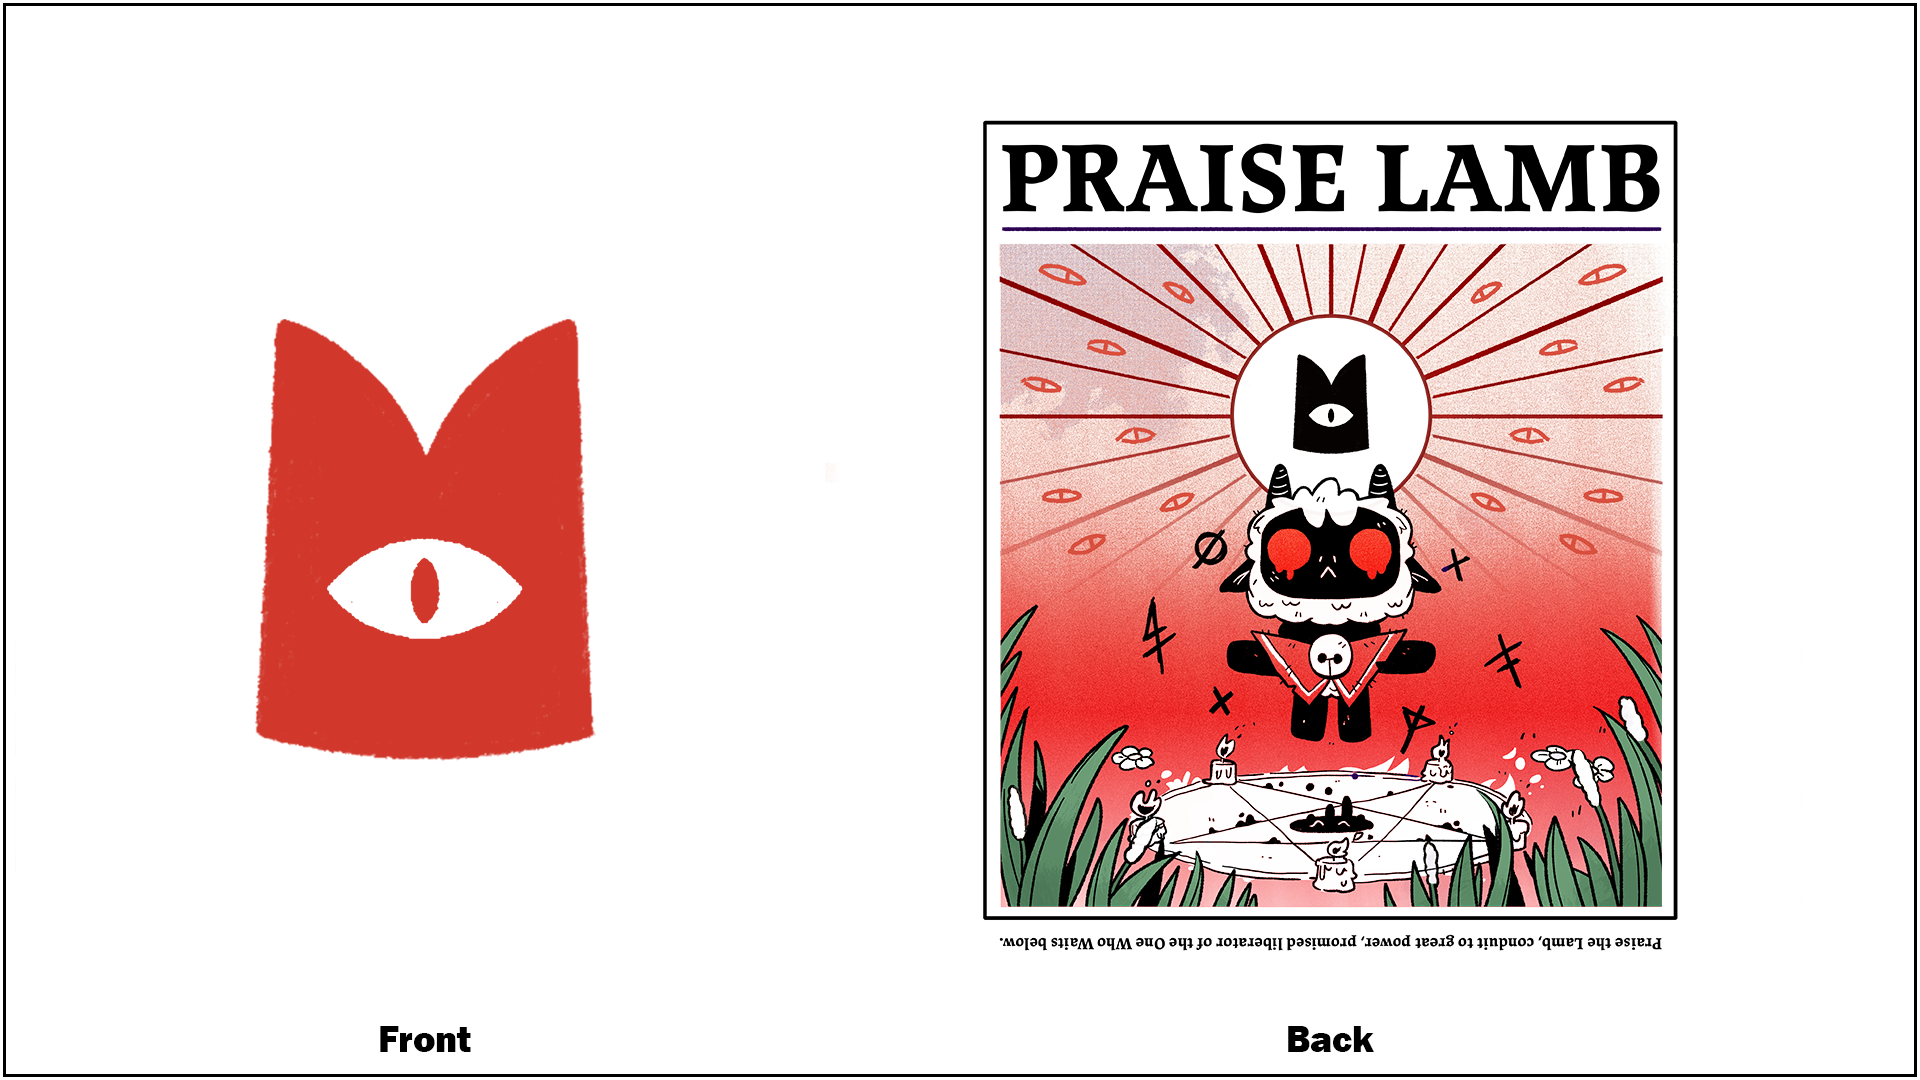 Praise Lamb